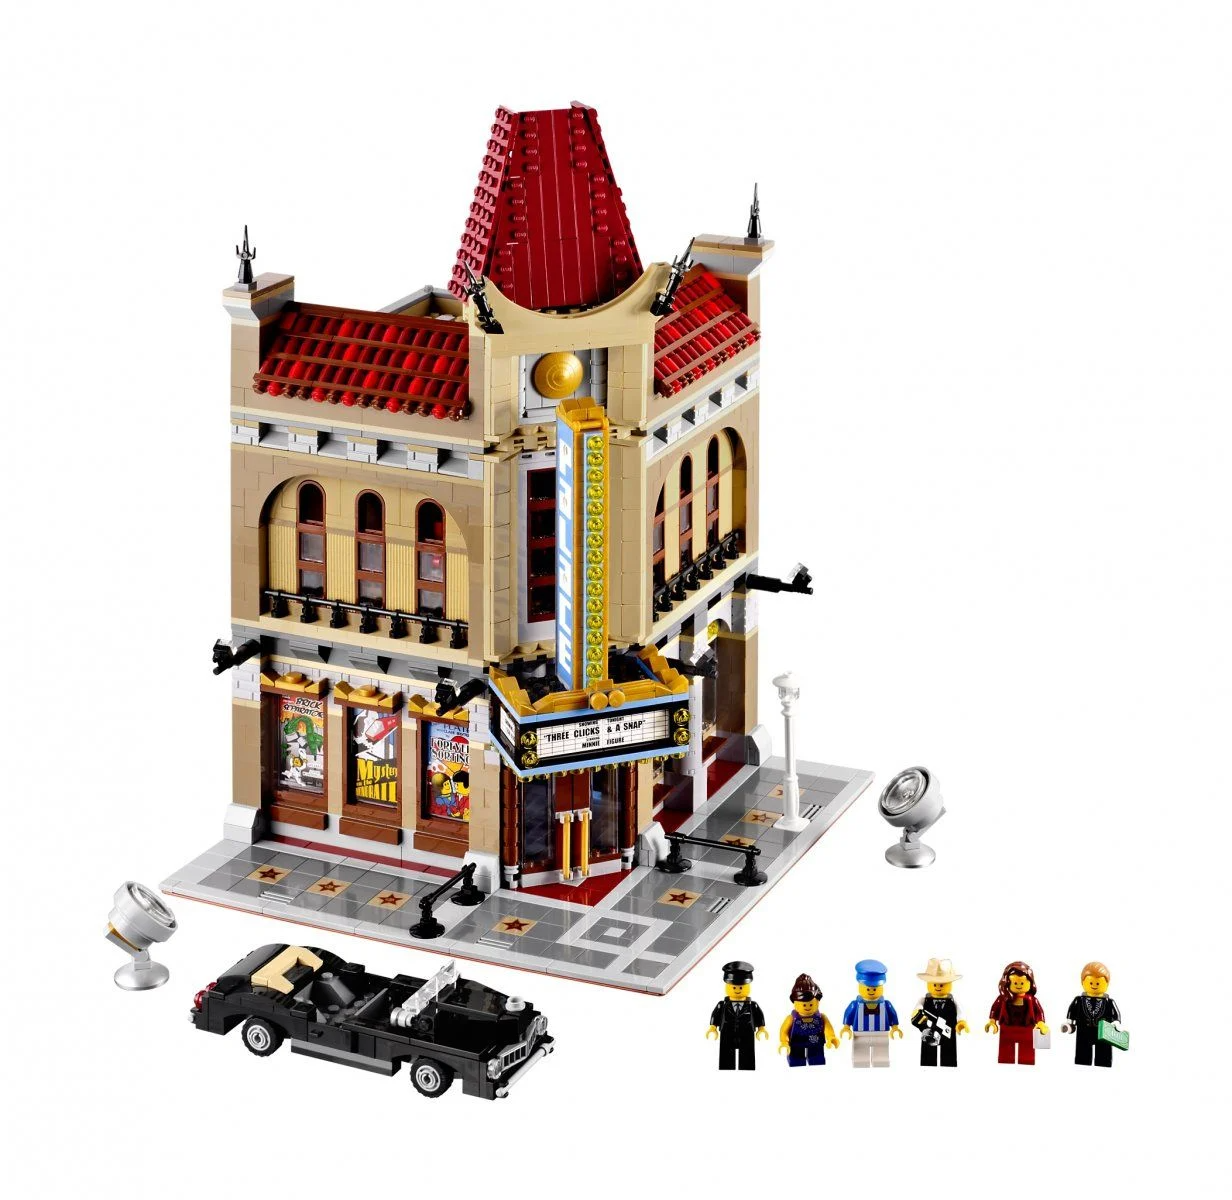 LEGO Creator Expert Palace Cinema Modular Buildings